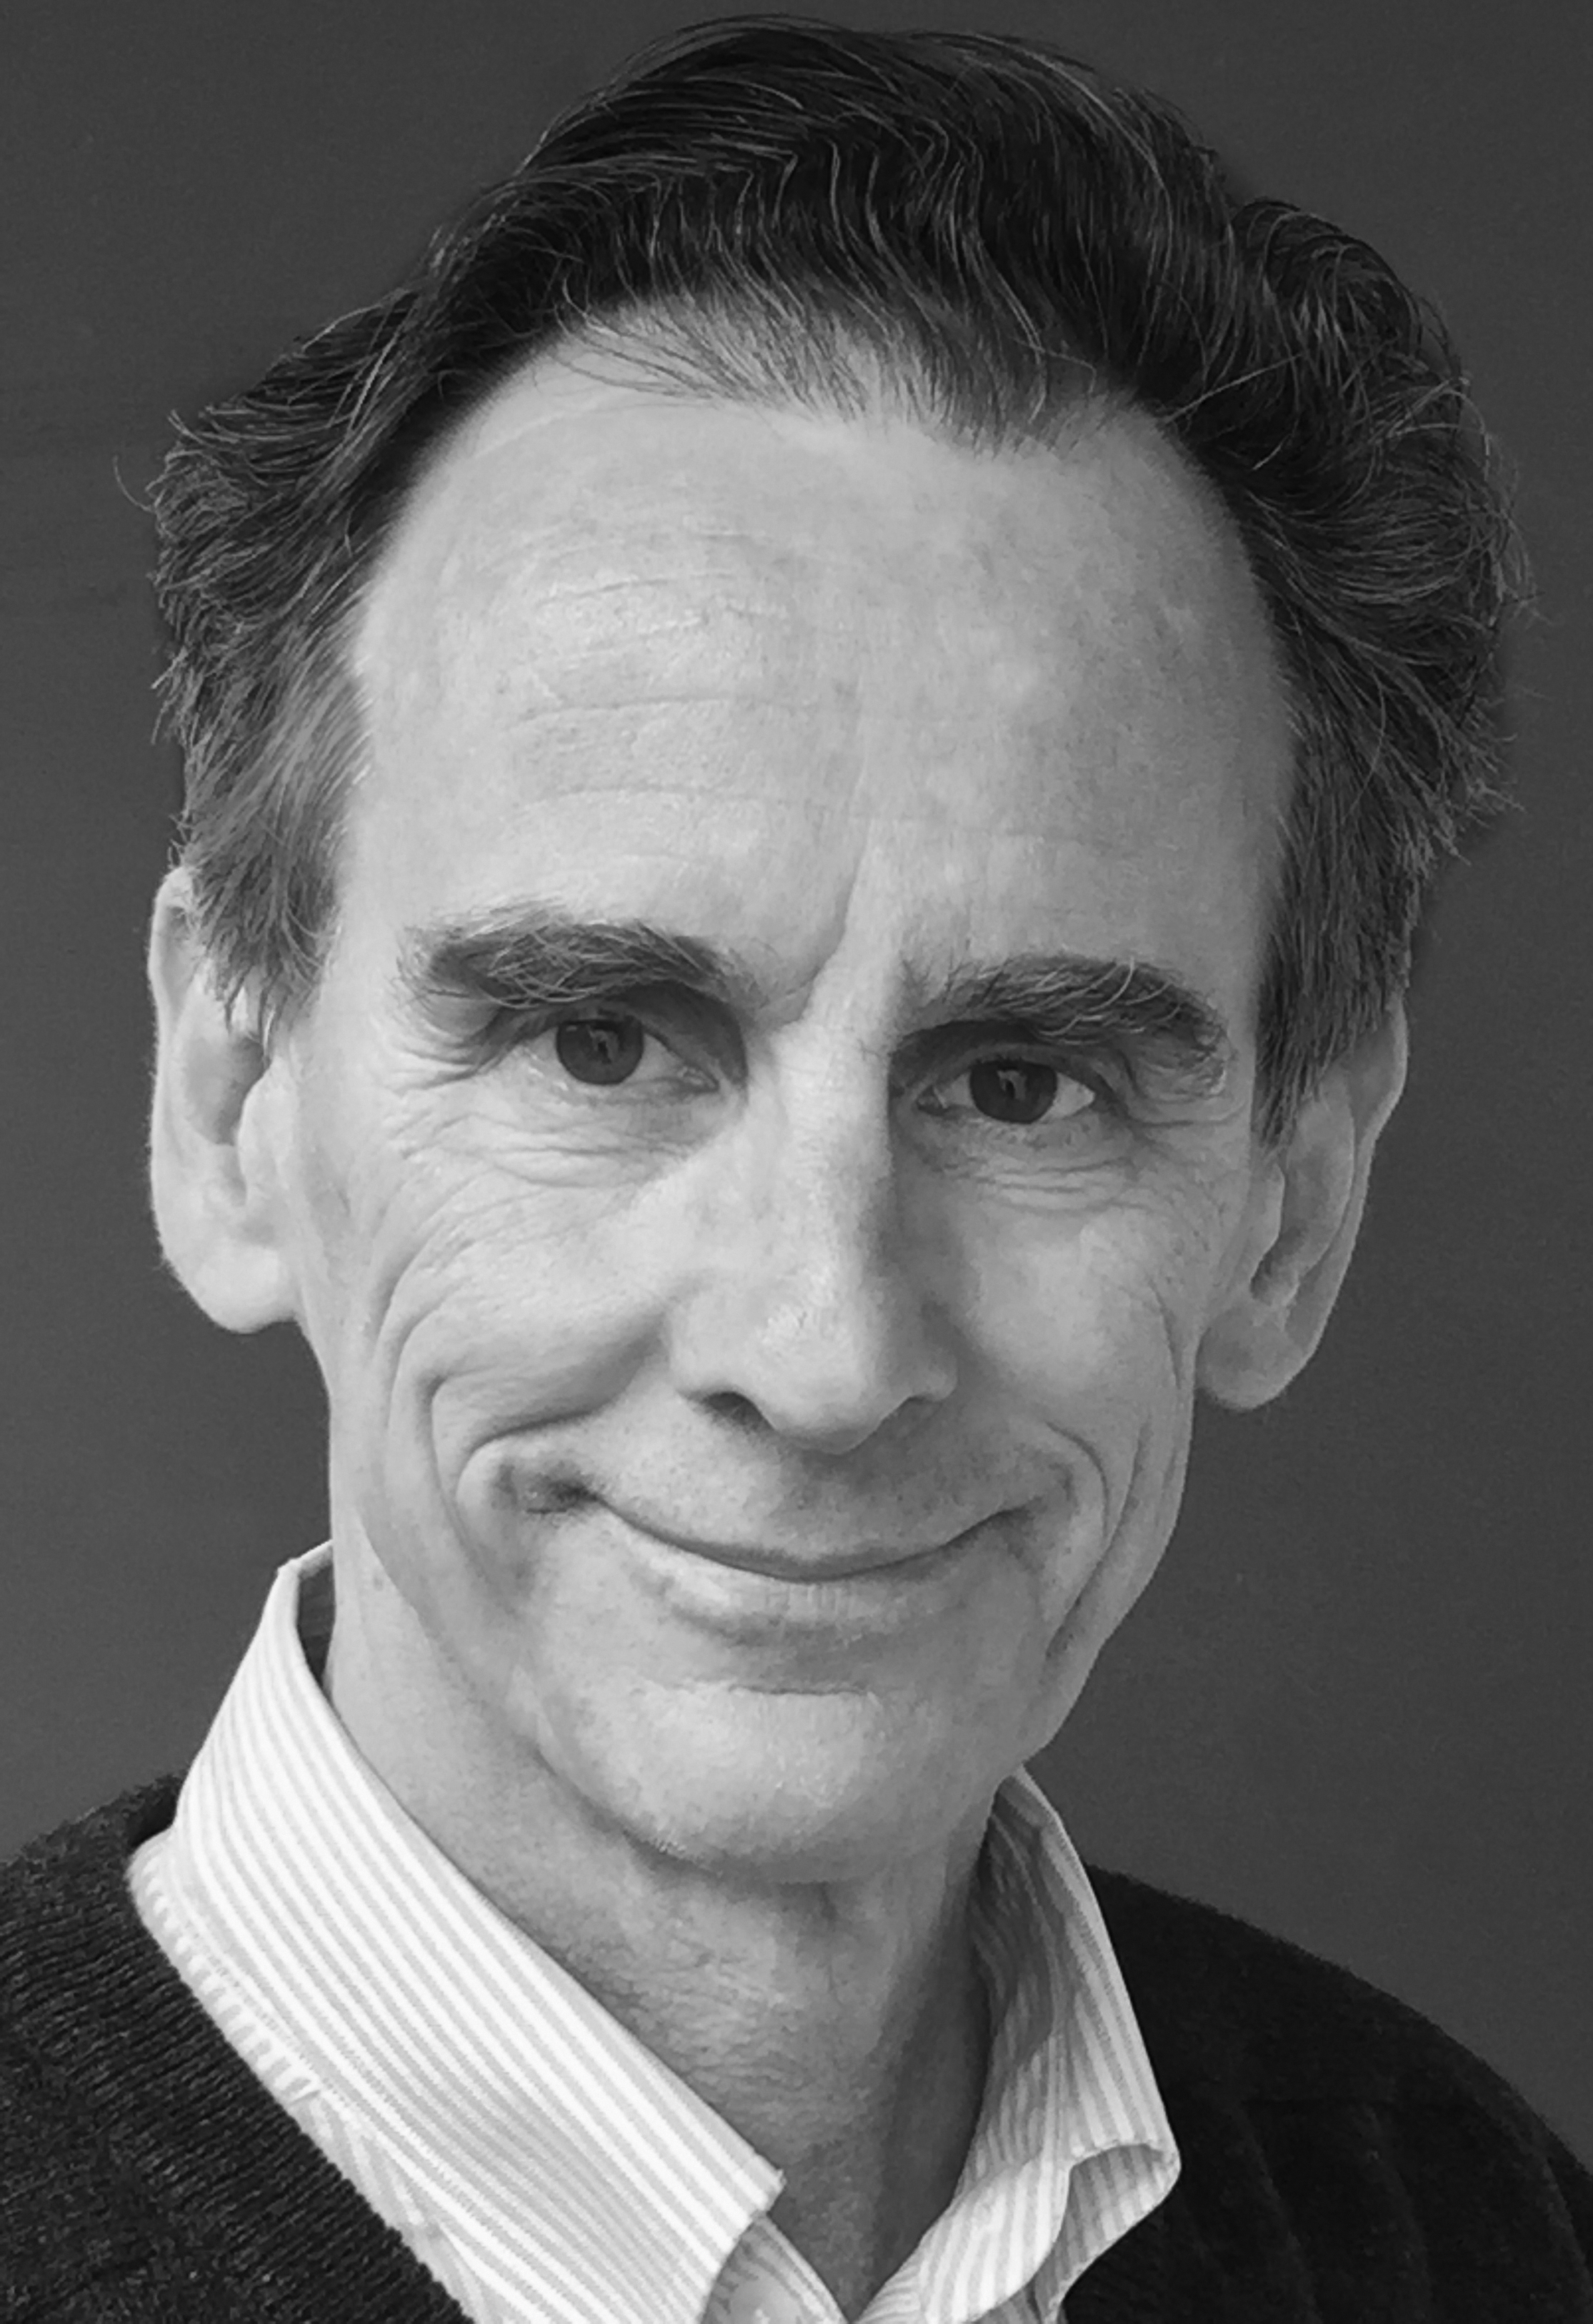 Steve Peisch, the author